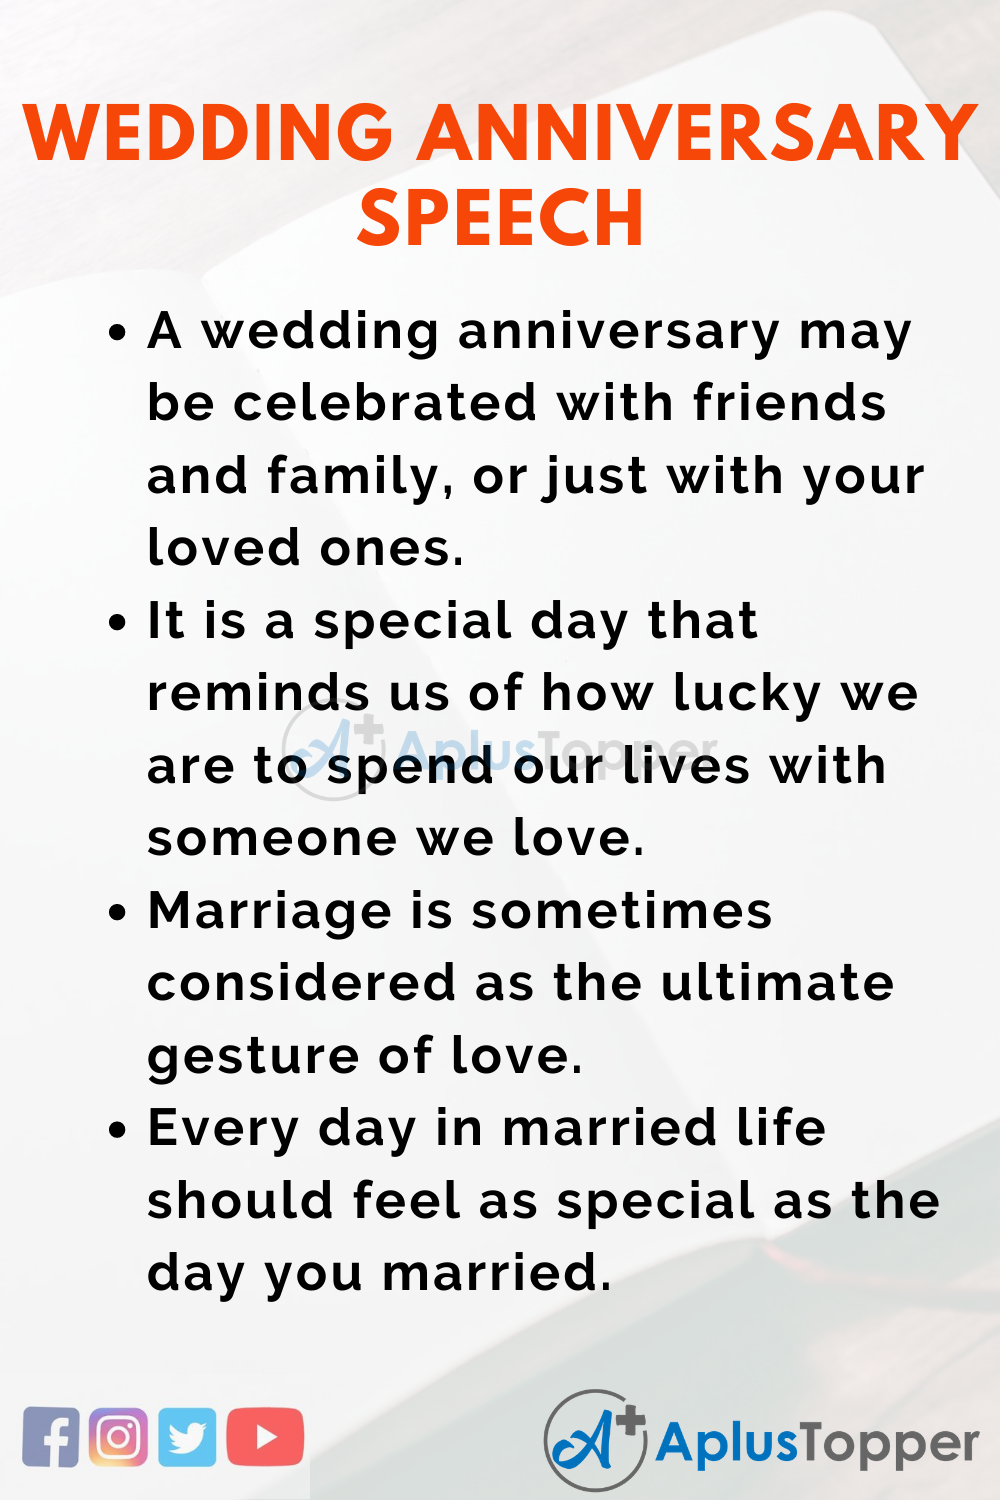 speech on anniversary of marriage